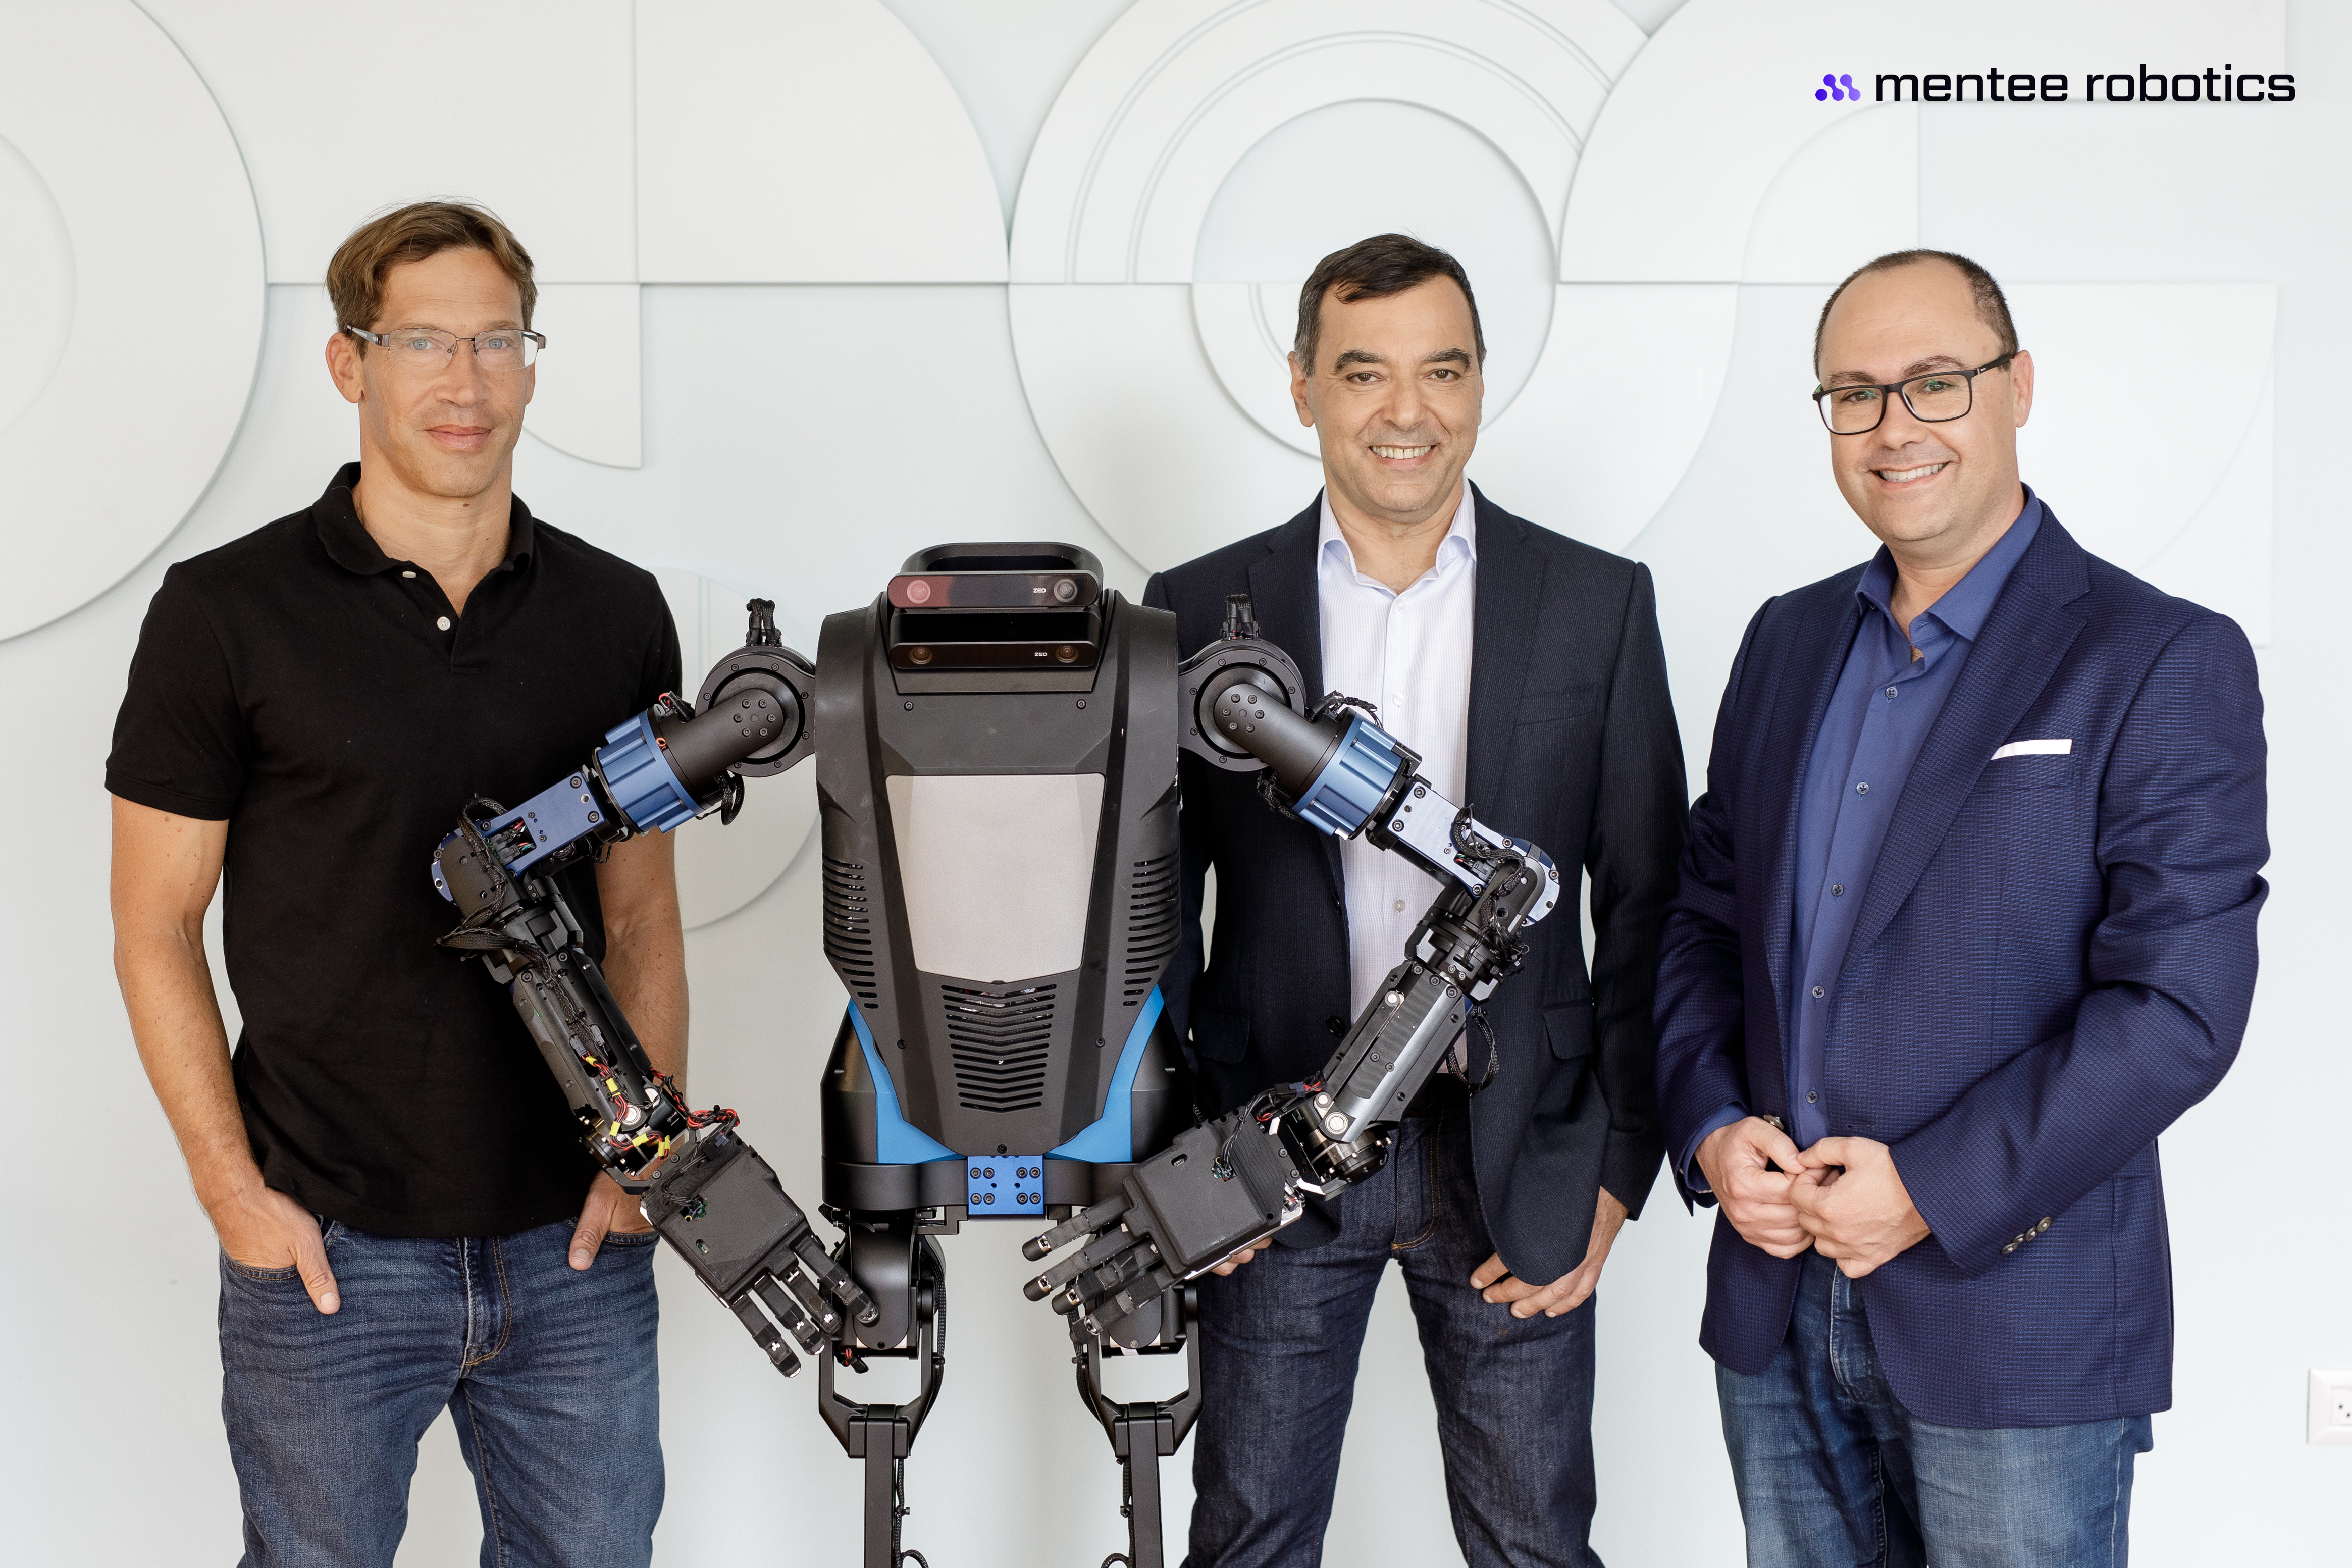 Mentee Robotics team with its humanoid robot prototype